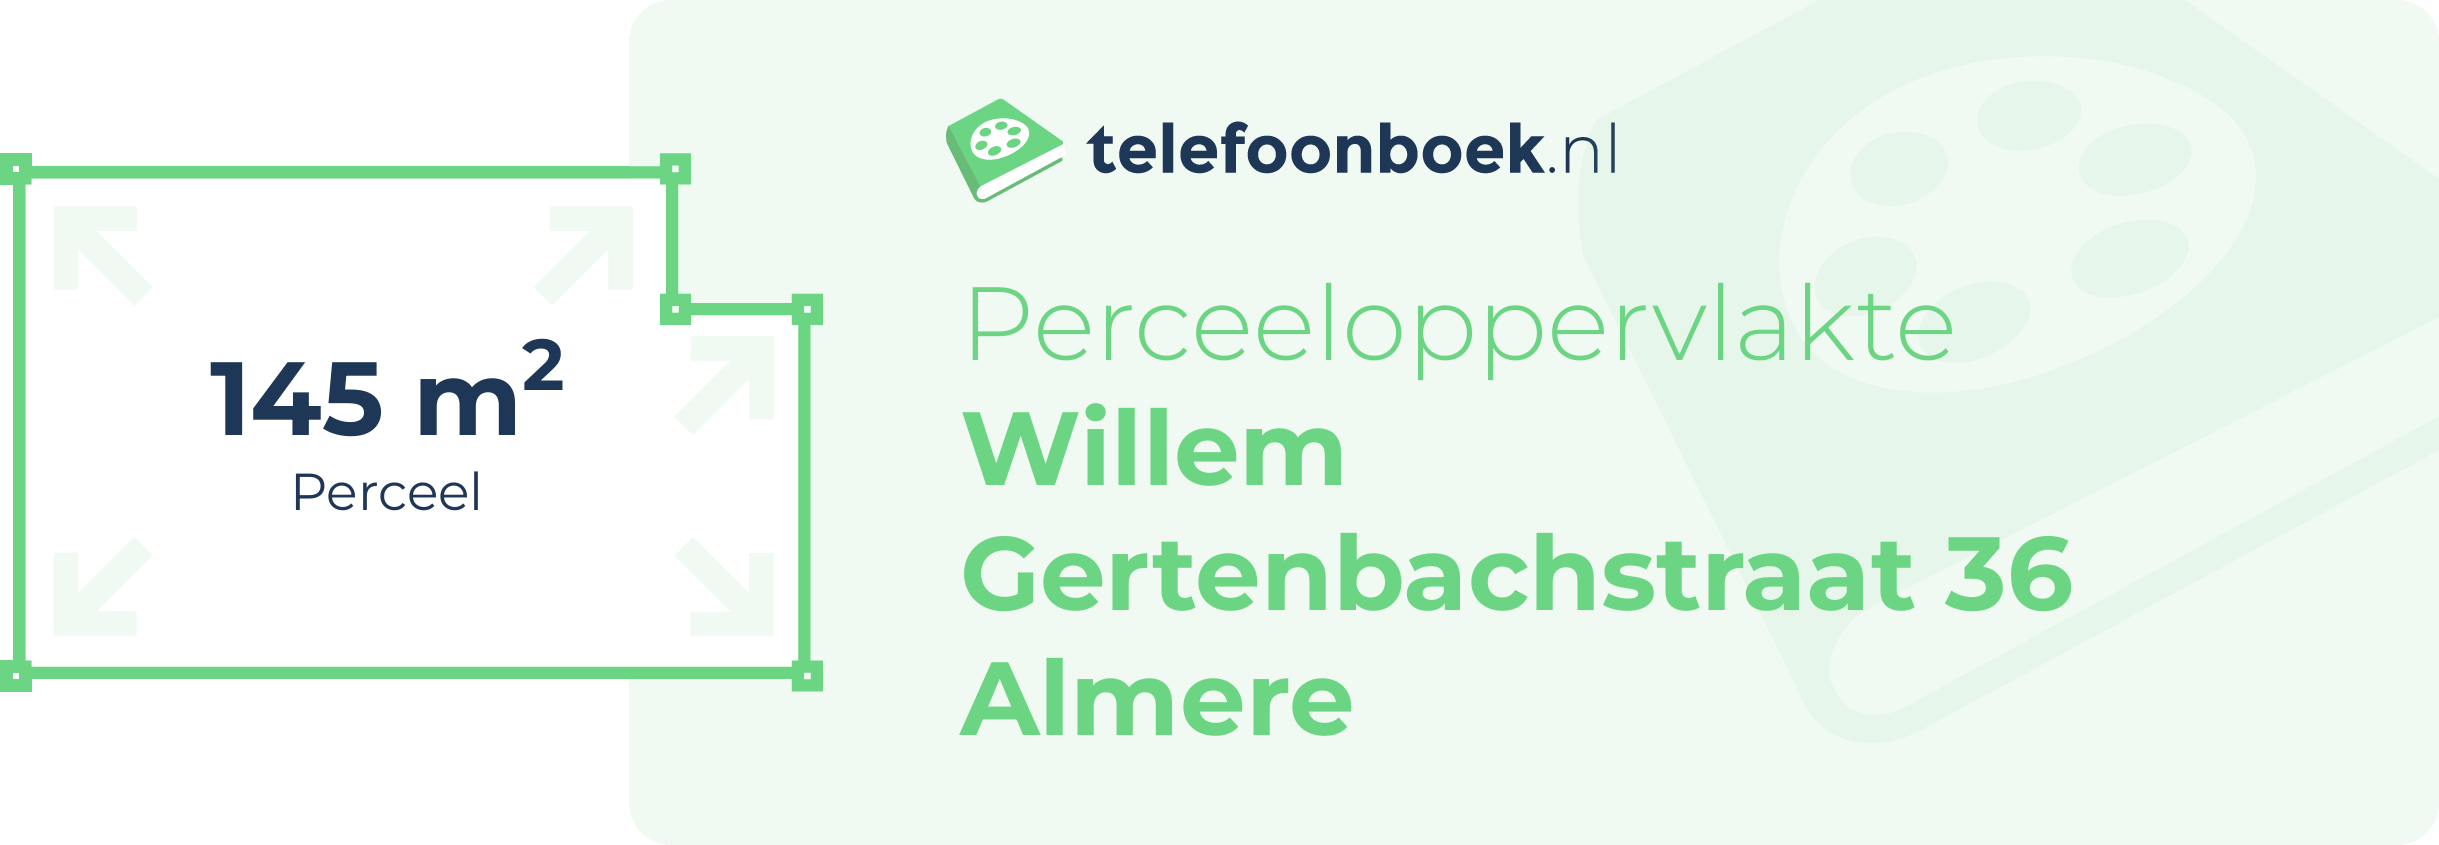 Perceeloppervlakte Willem Gertenbachstraat 36 Almere